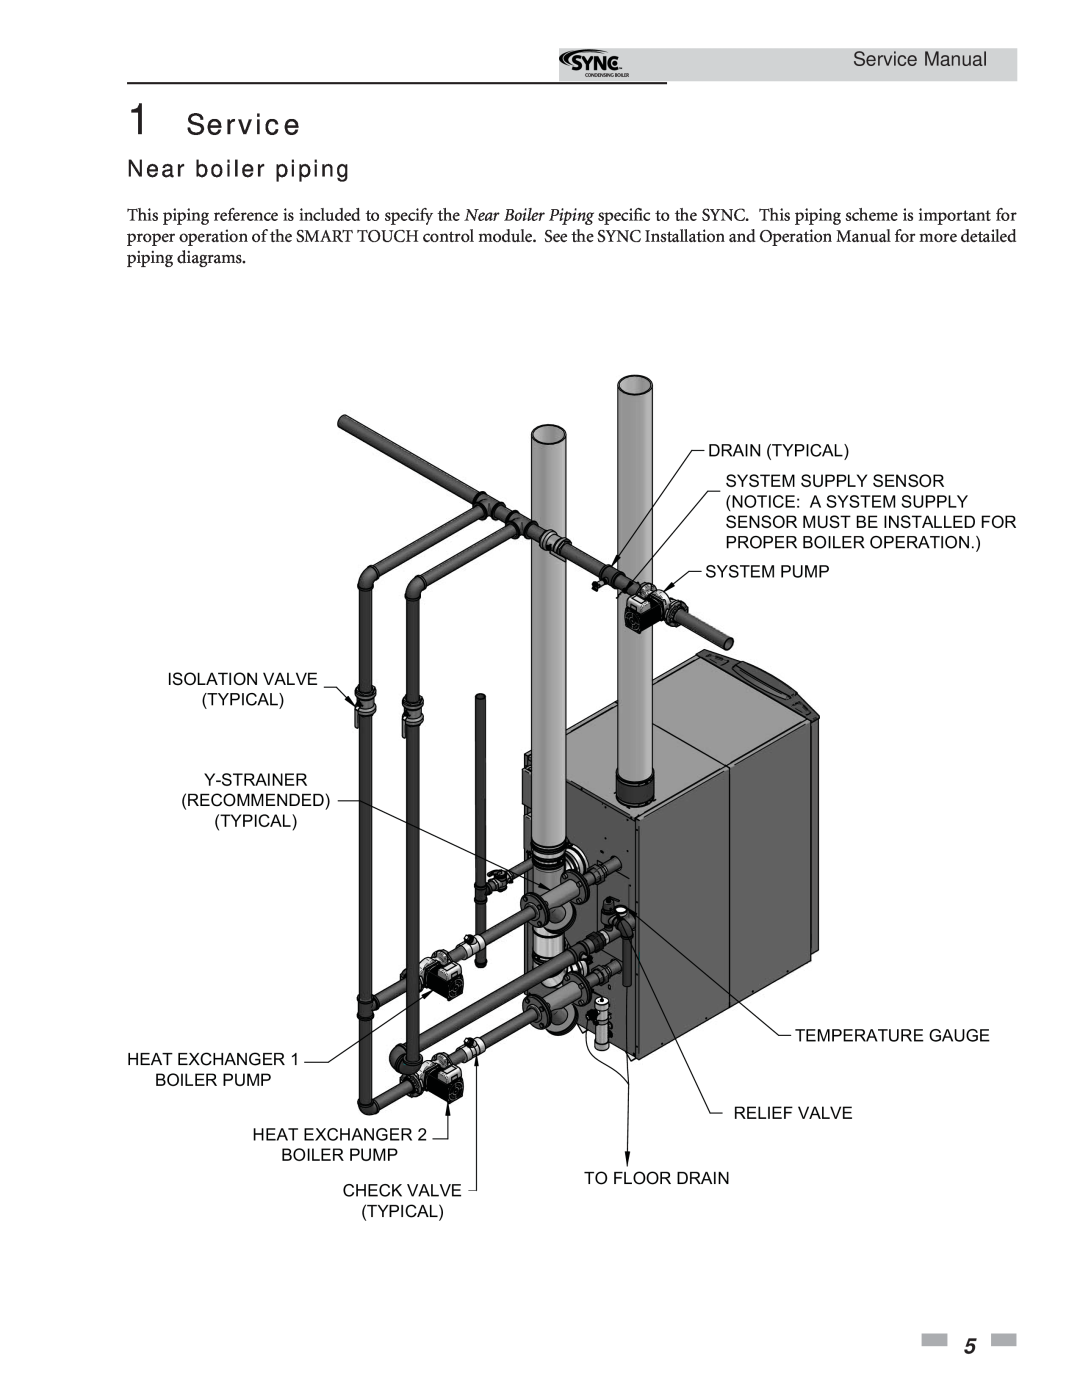 Lochinvar 1.3 service manual Near boiler piping, Service Manual 